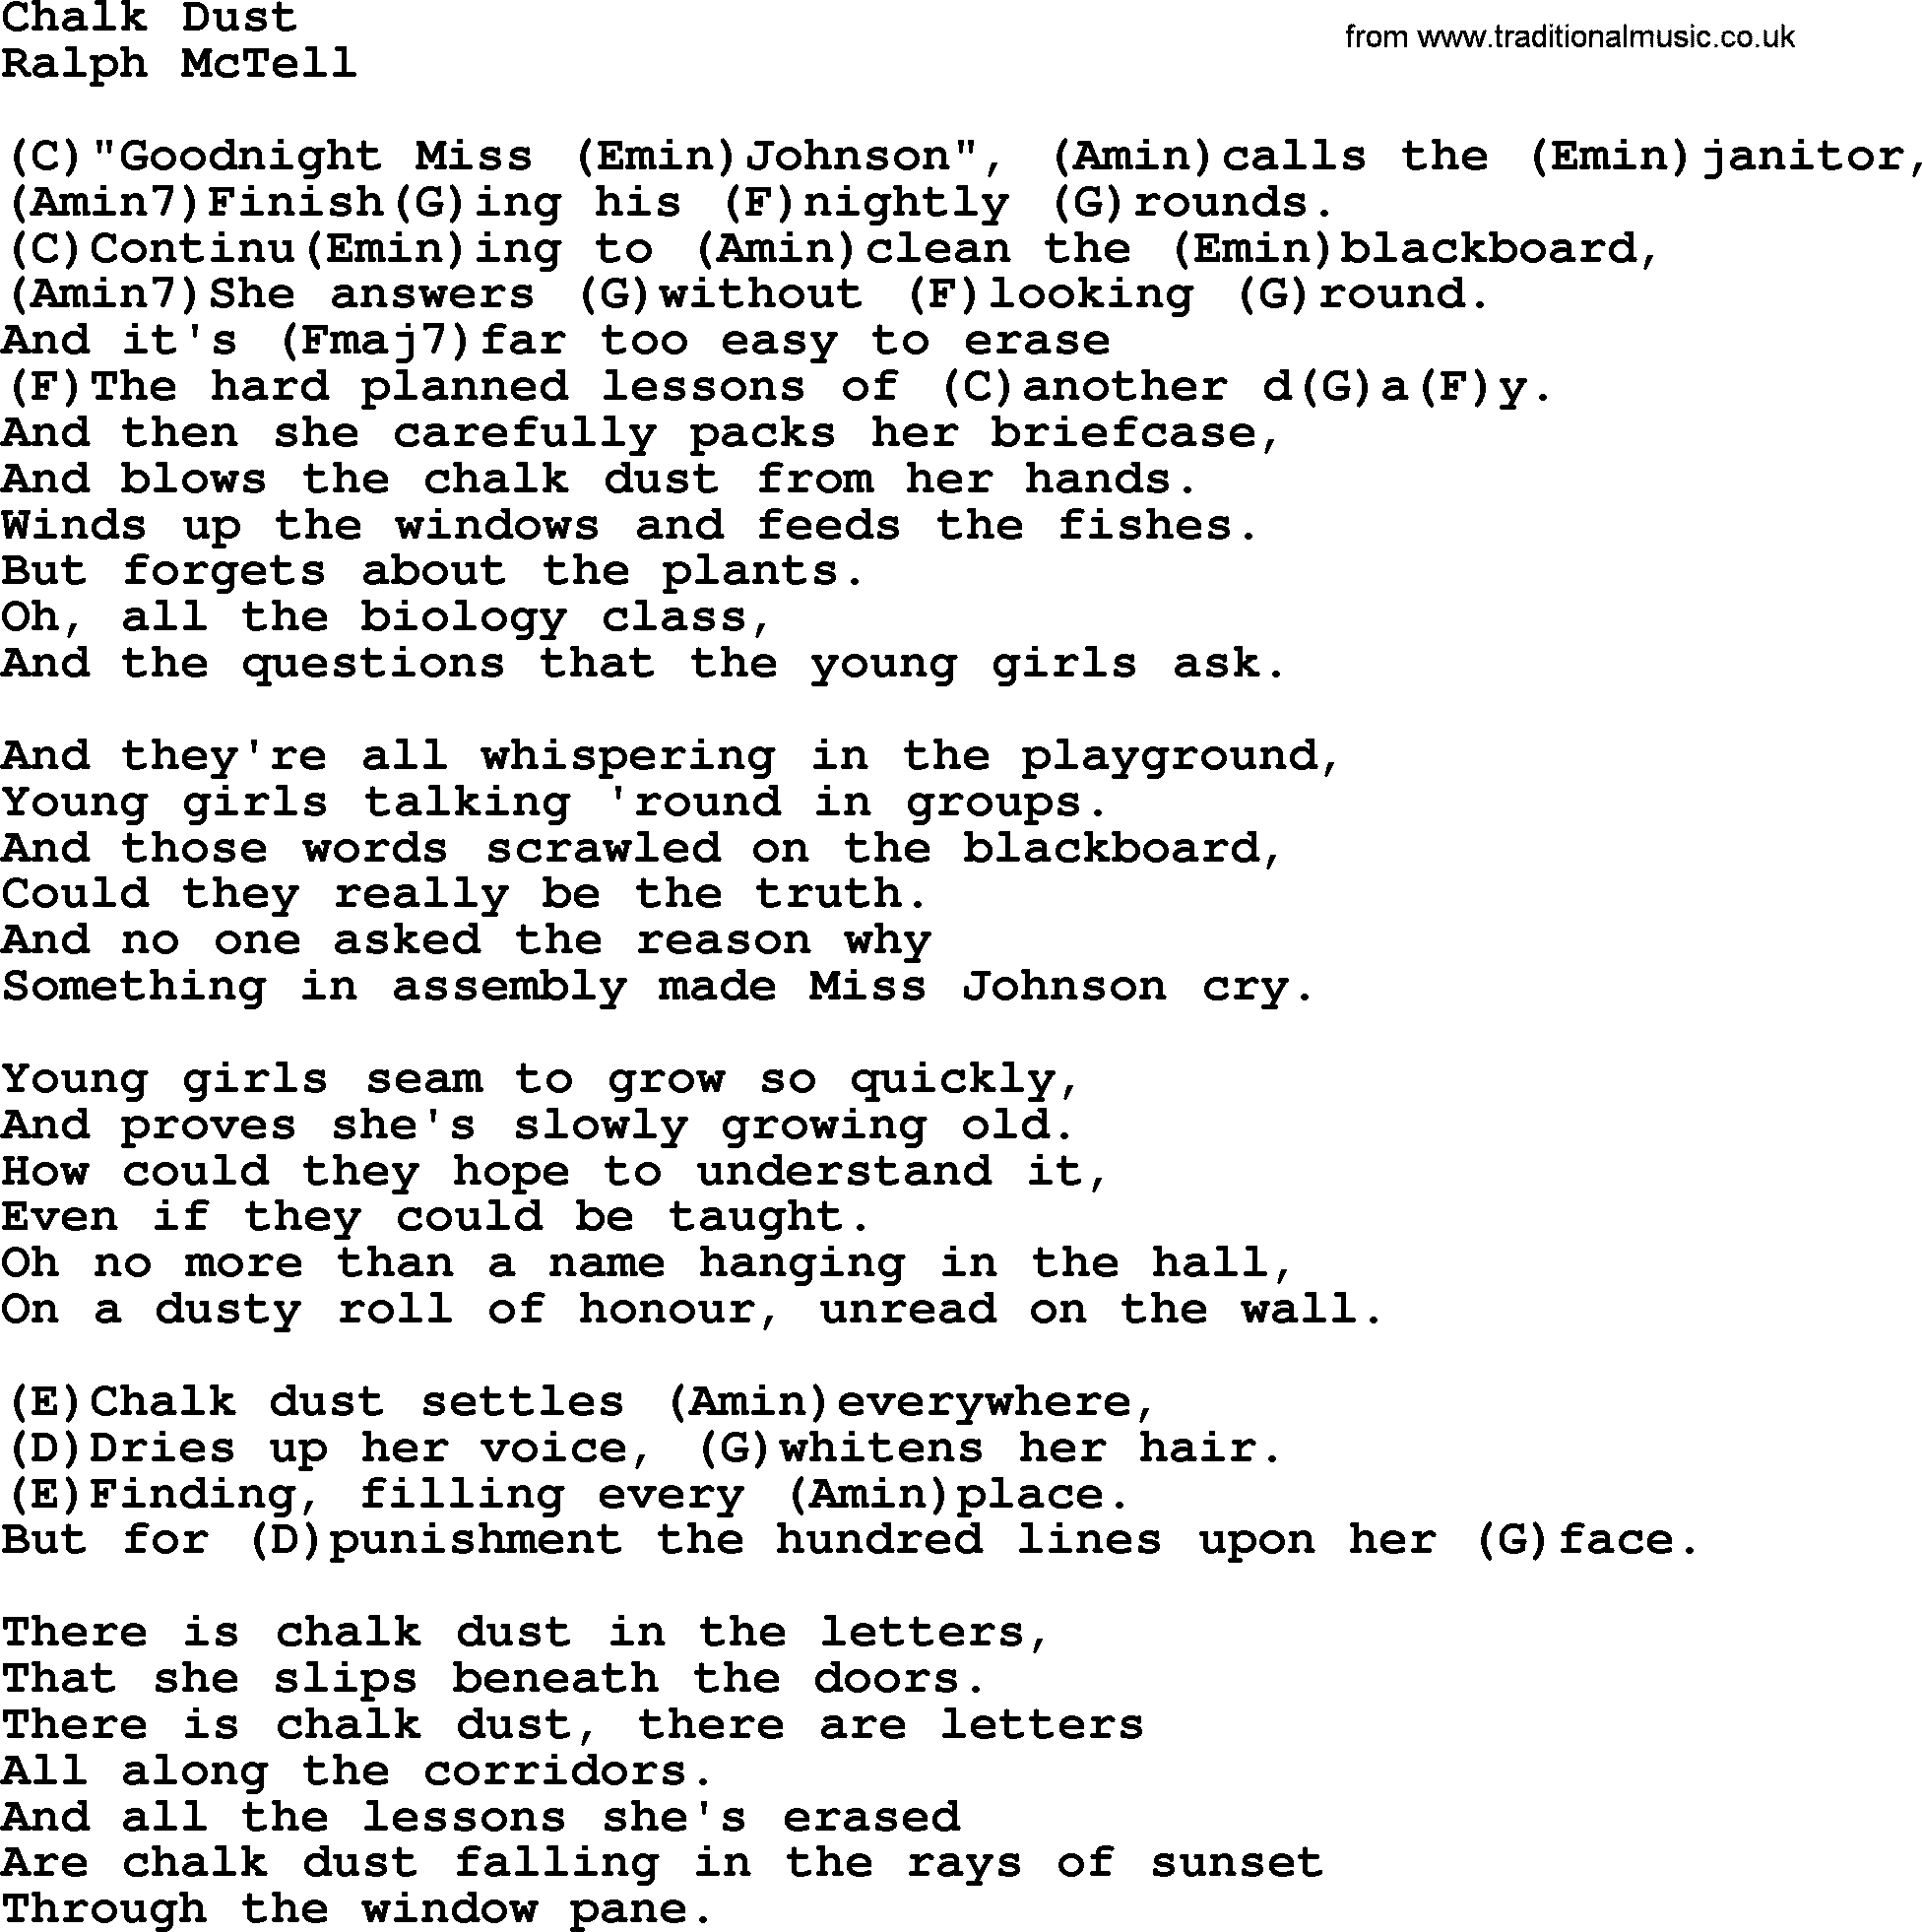 Ralph McTell Song: Chalk Dust, lyrics and chords